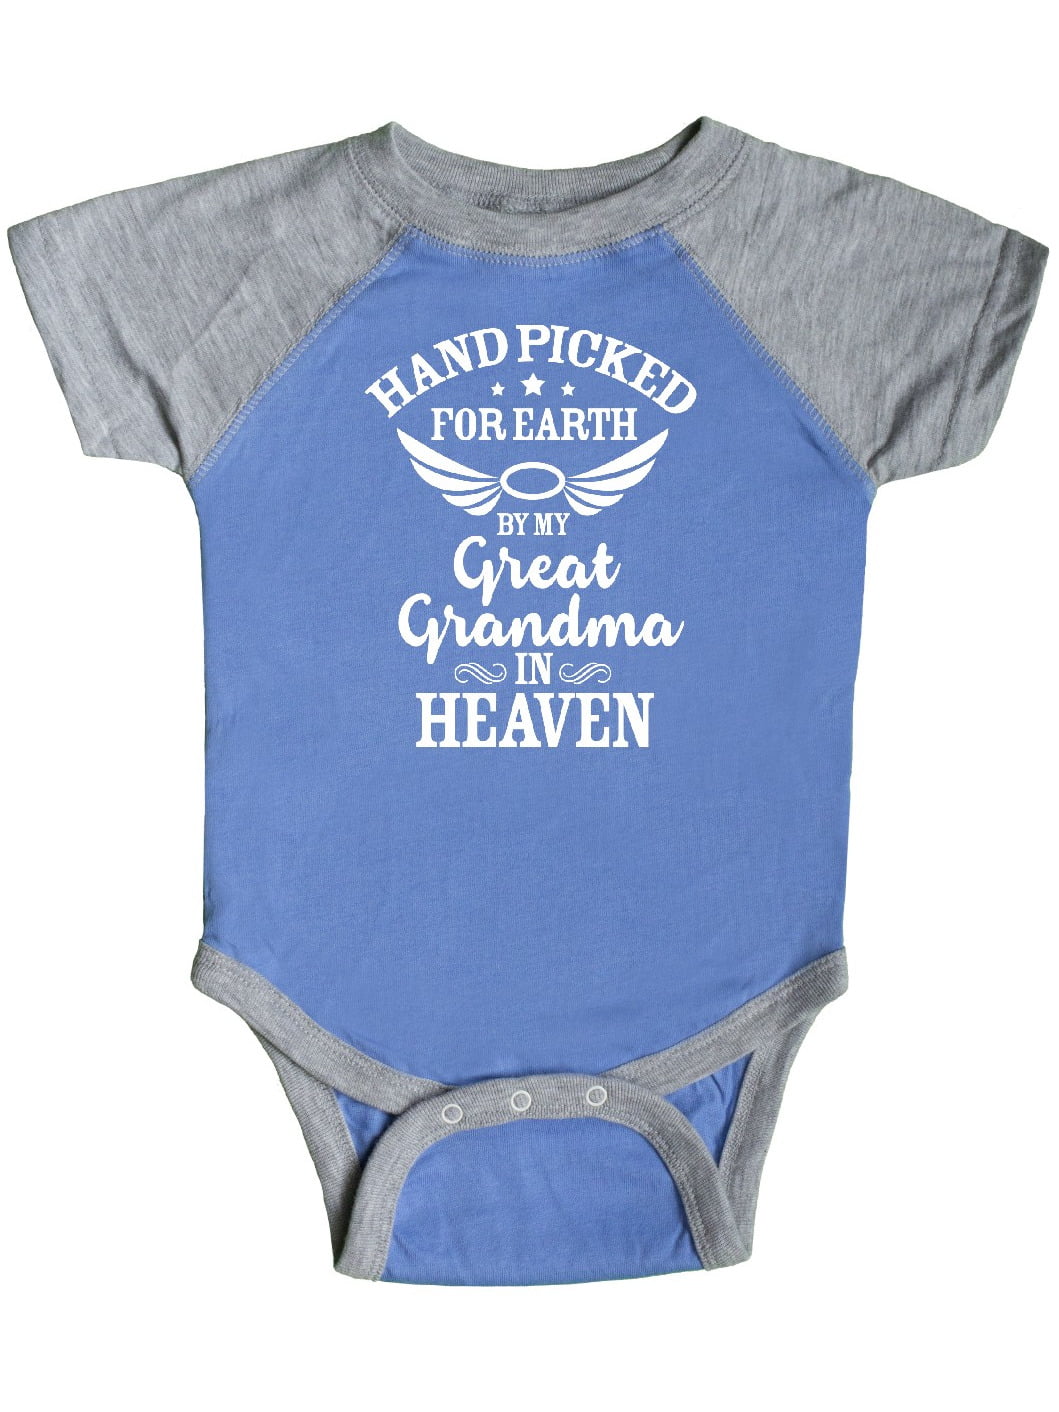 Handpicked for Earth by my Grandma in Heaven Baby Infant Blanket & Bib Set 